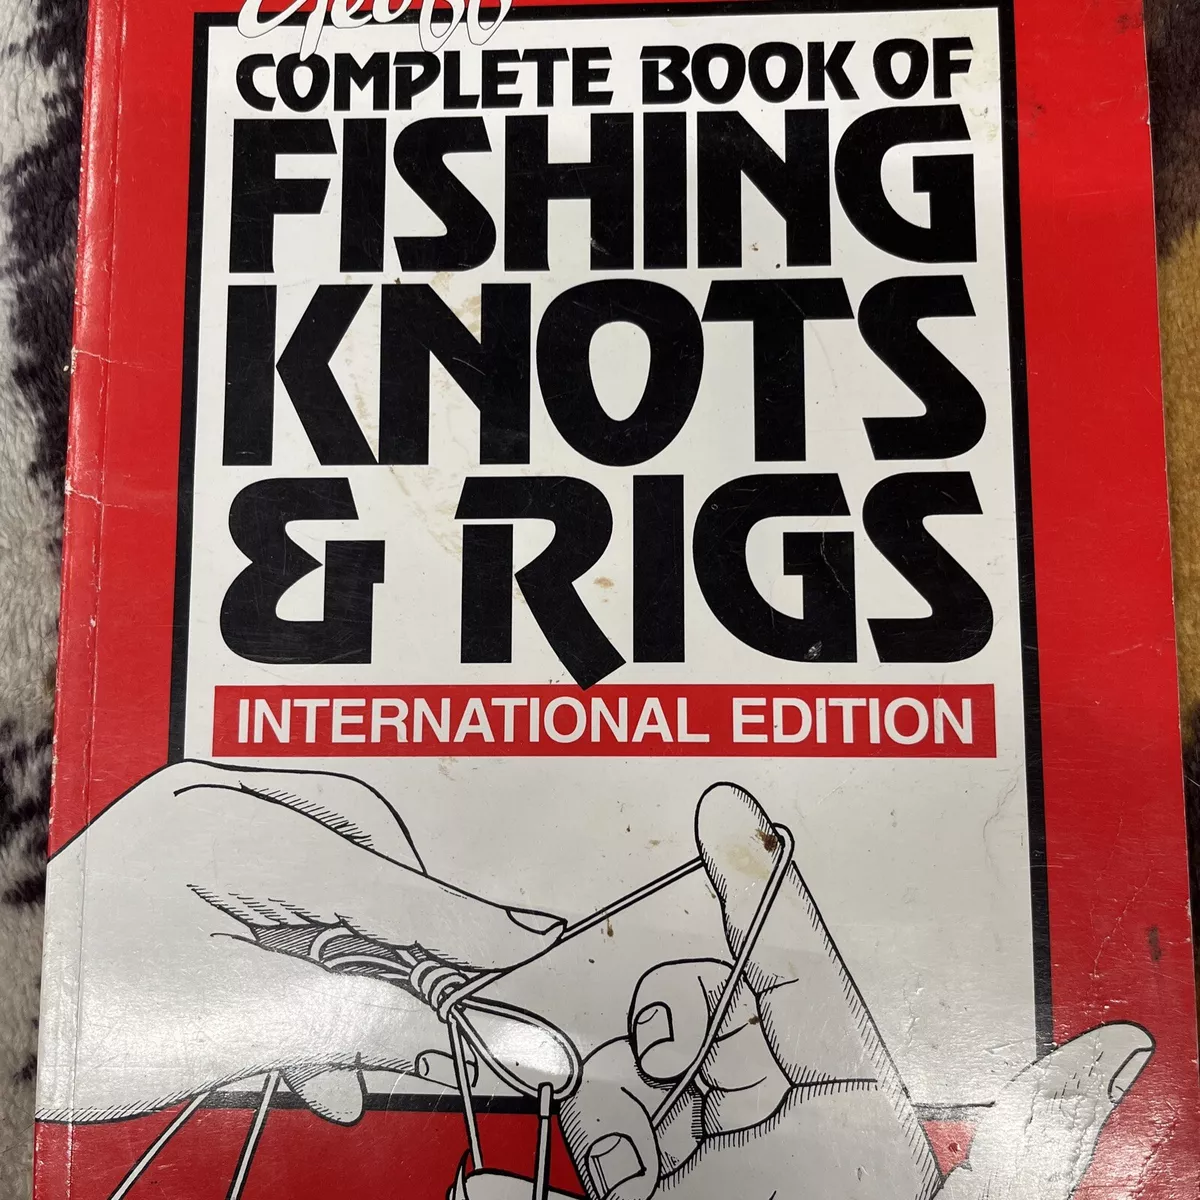 Geoff Wilson's Fishing Knots & Rigs International Edition